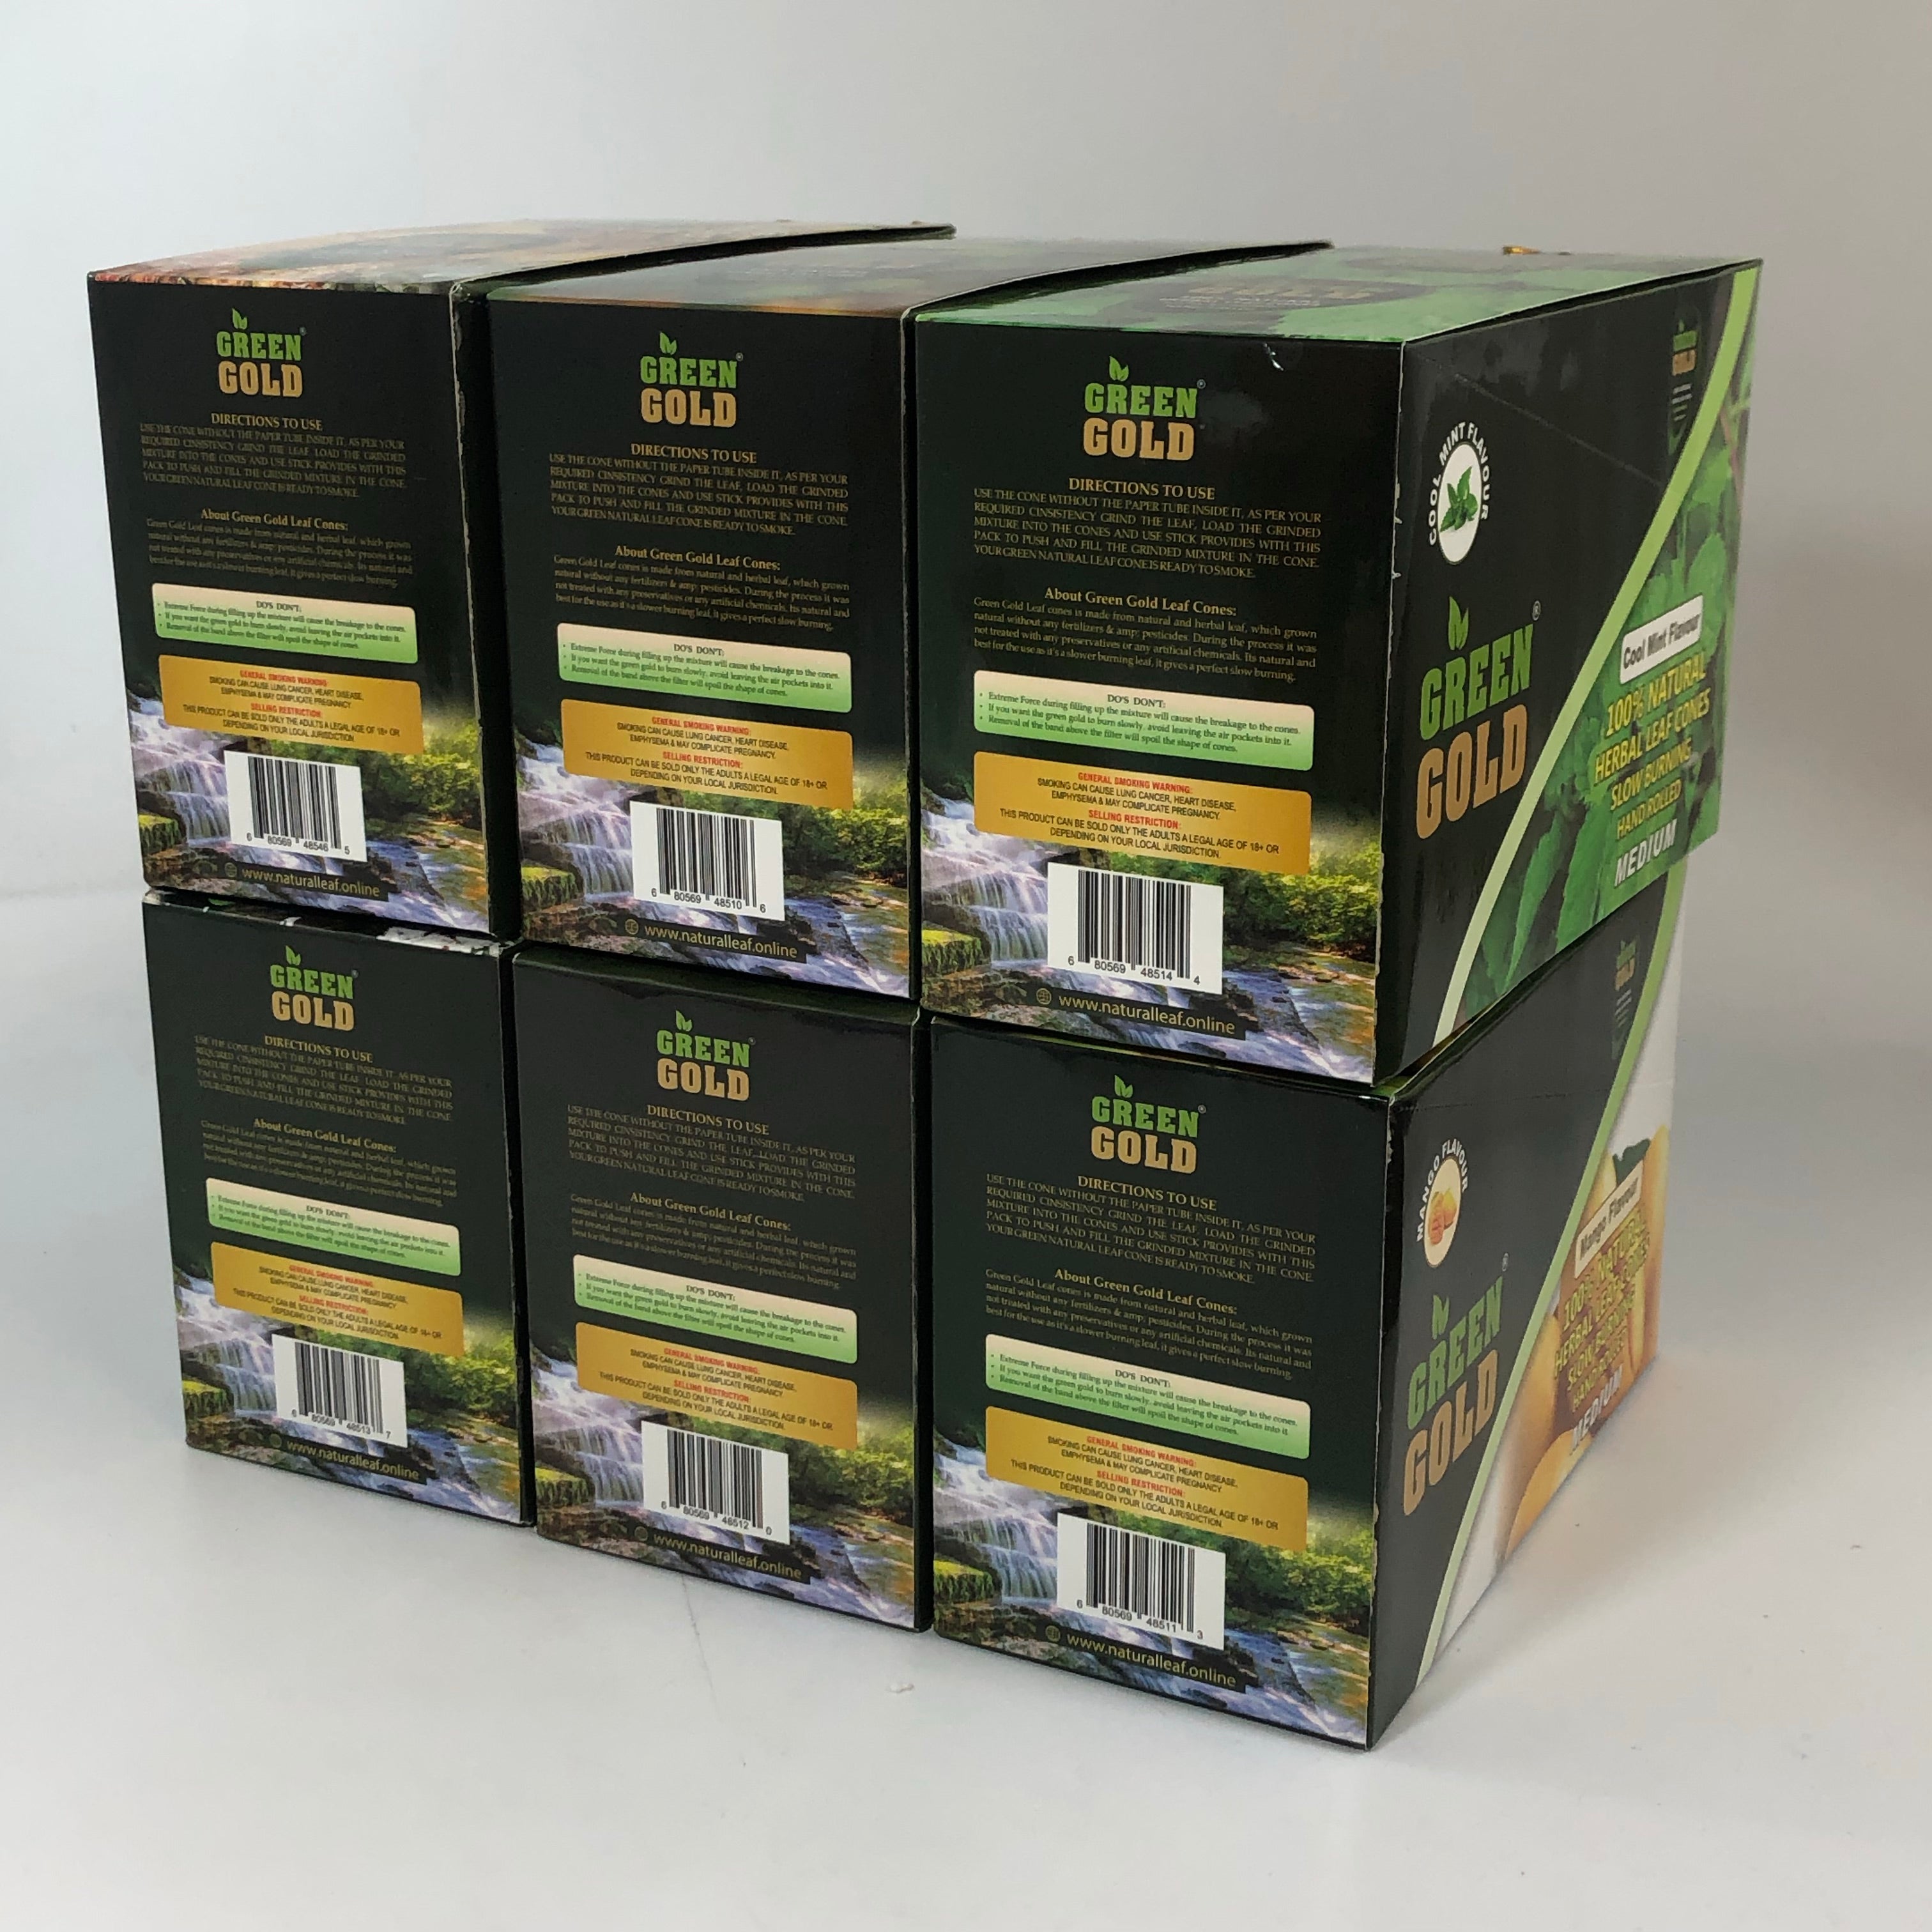 GREEN GOLD ALL NATURAL HERBAL LEAF CONES MEDIUM SIZE 24 BOXES PER DISPLAY (2 CONES PER BOX)